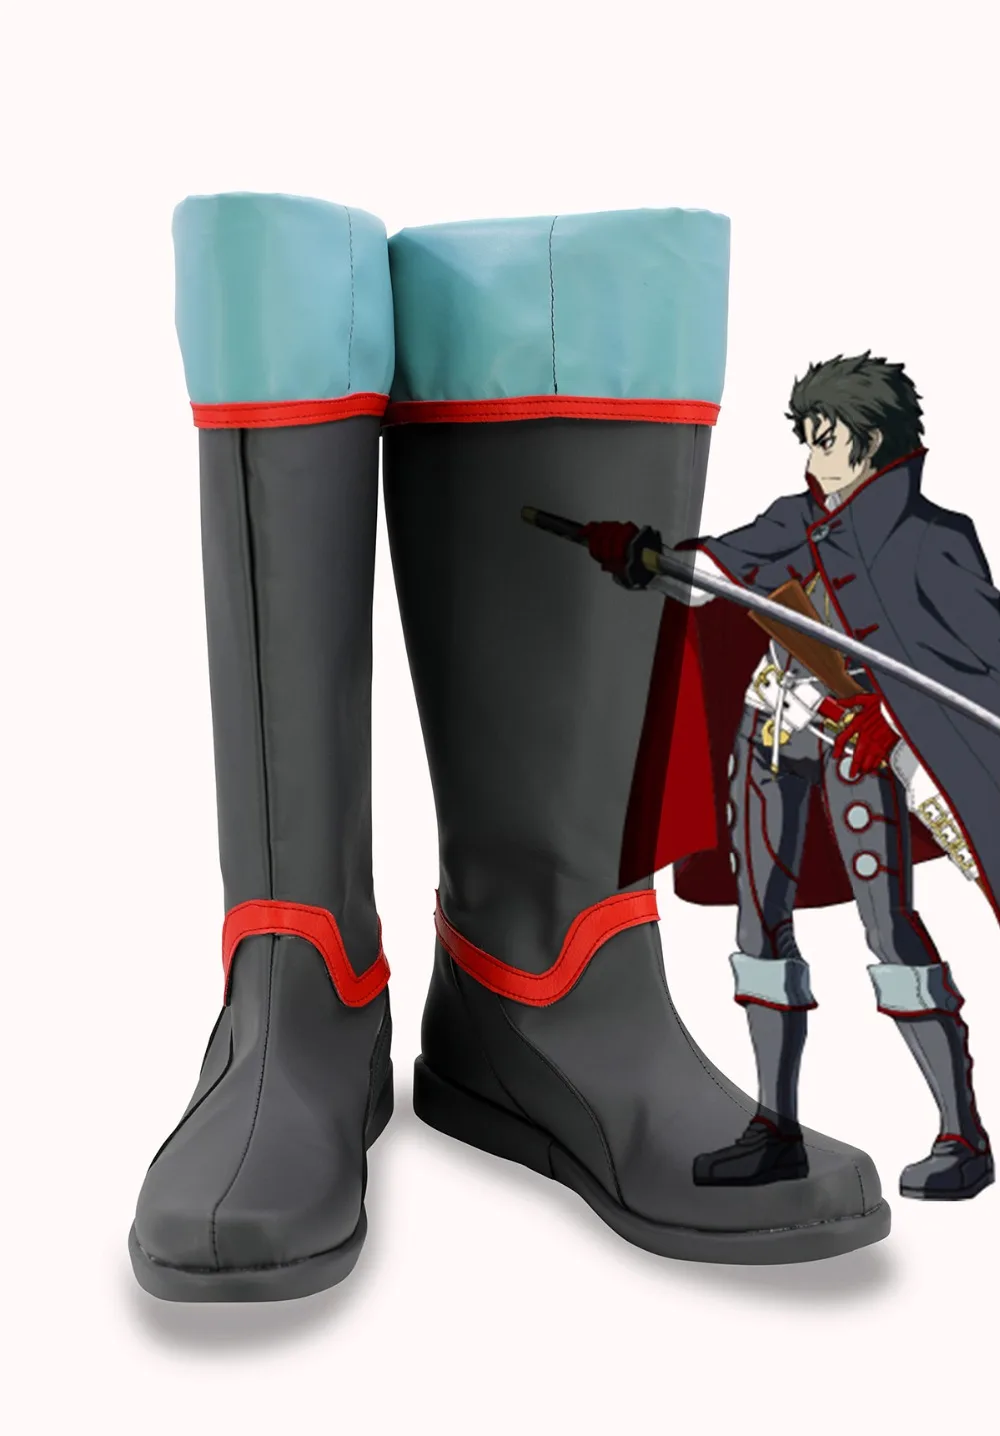 Fate/Grand Order, Ботинки для косплея Хиджиката Тошизо, Обувь для женщин и мужчин, сшитая на заказ0